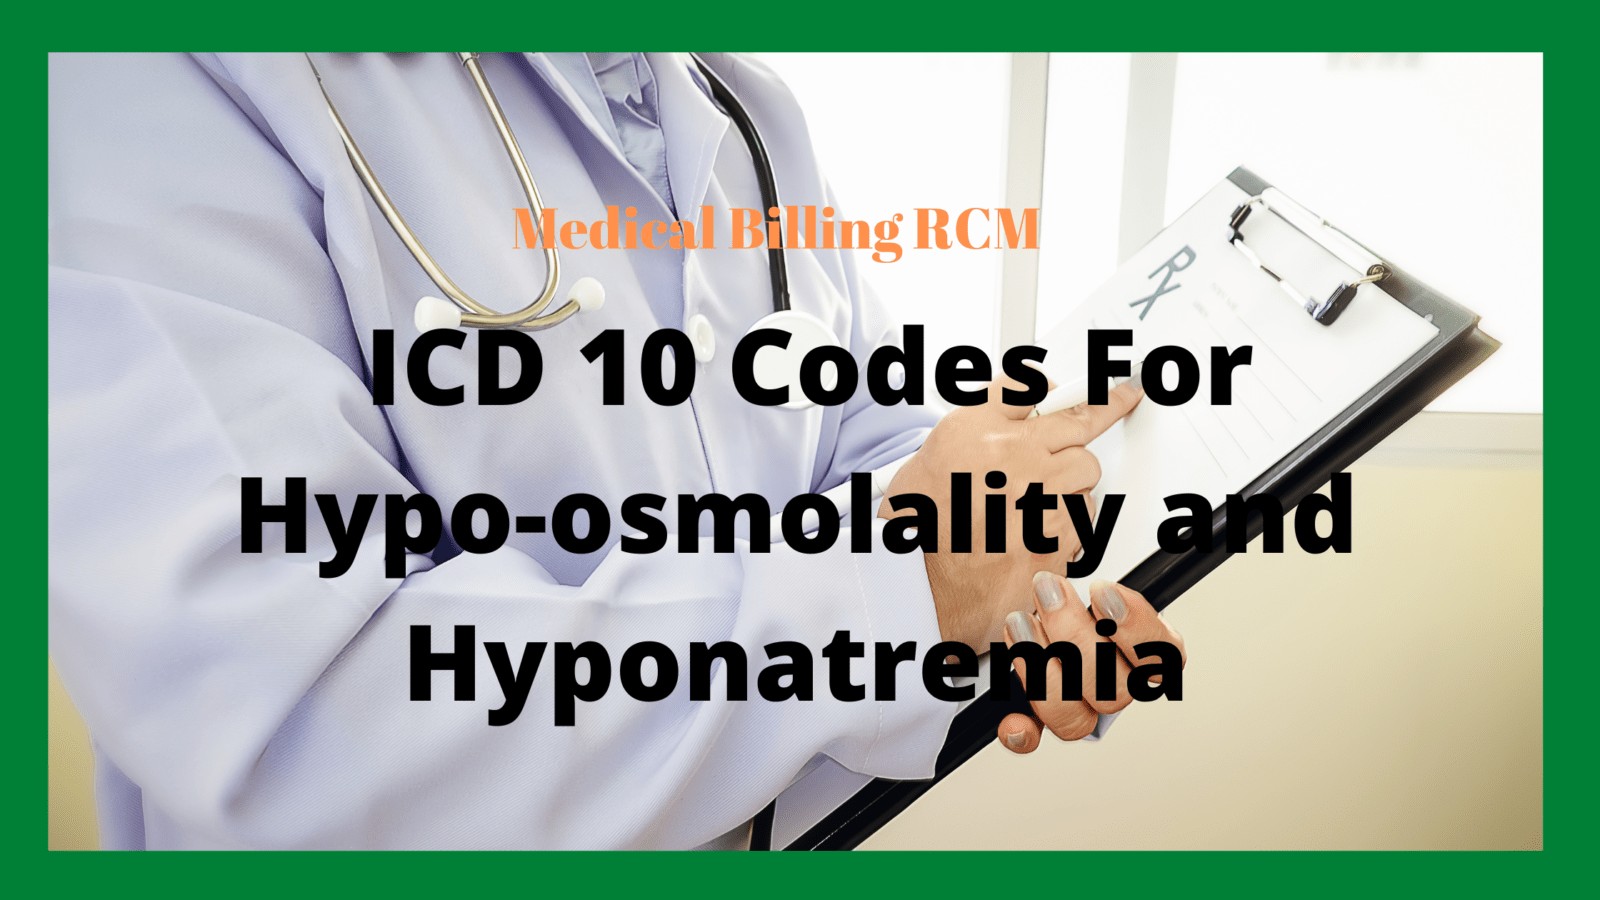 Hypo-osmolality and Hyponatremia ICD-10